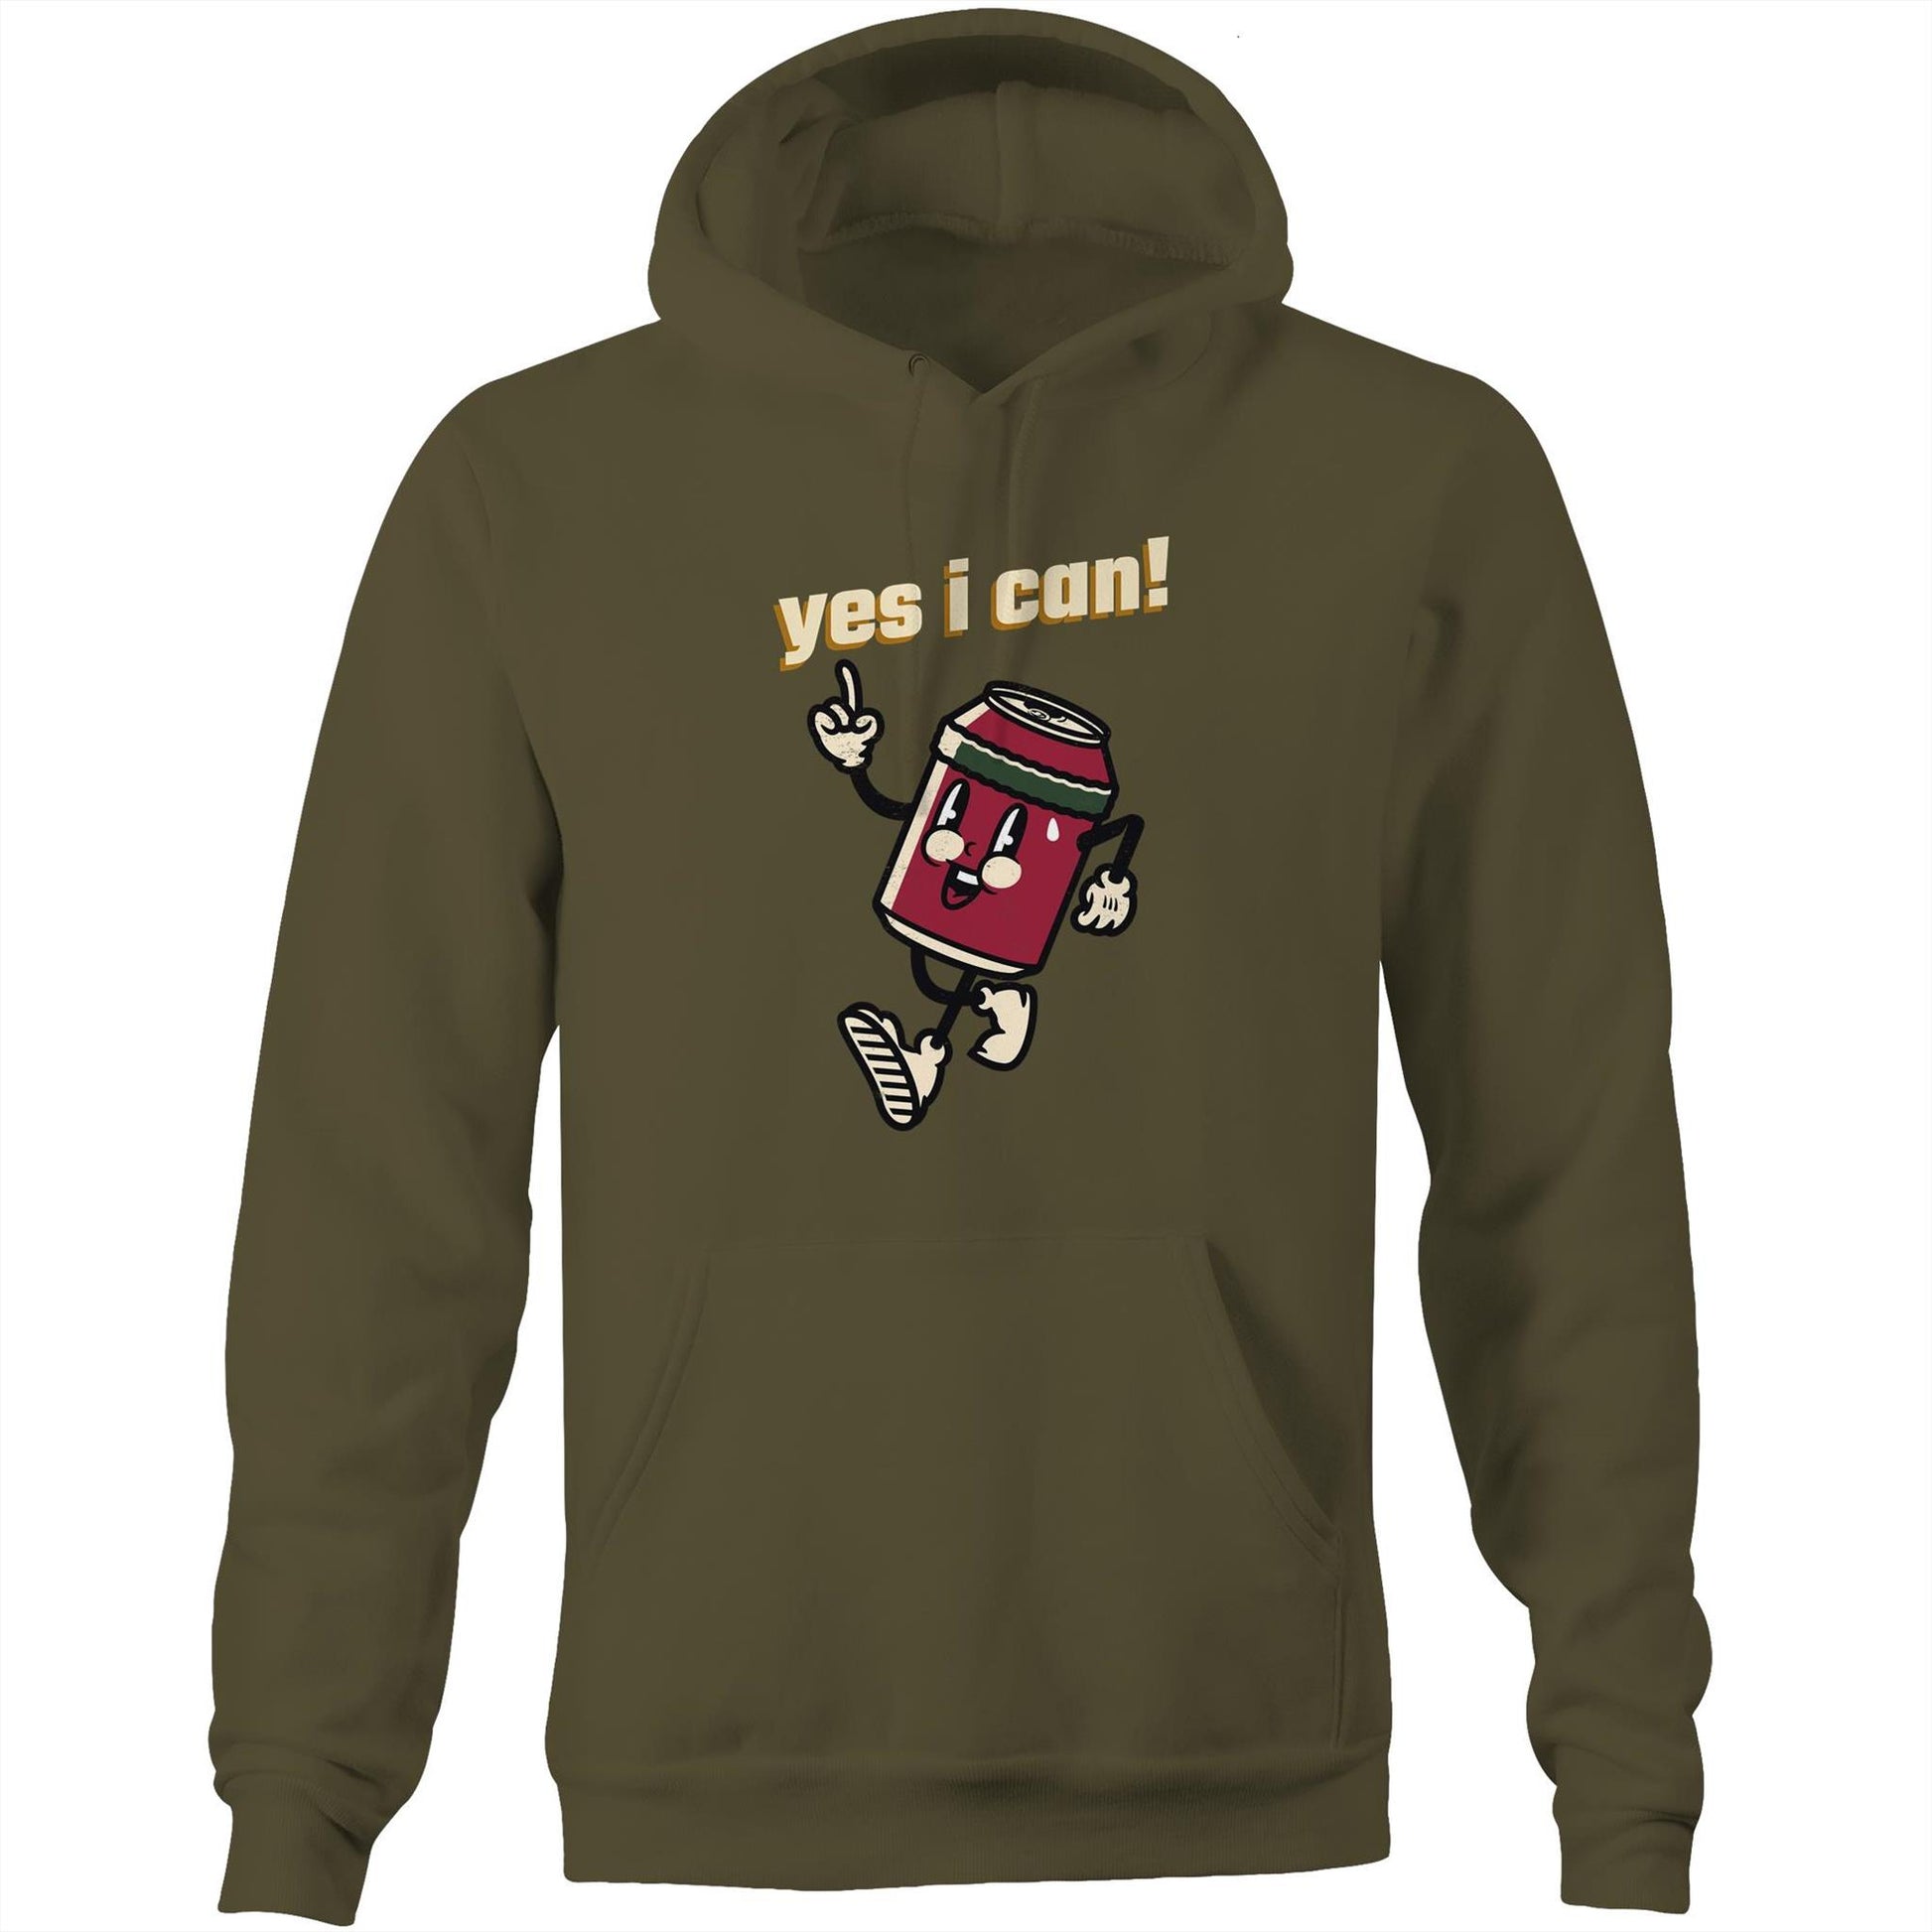 Yes I Can! - Pocket Hoodie Sweatshirt Army Hoodie Motivation Retro